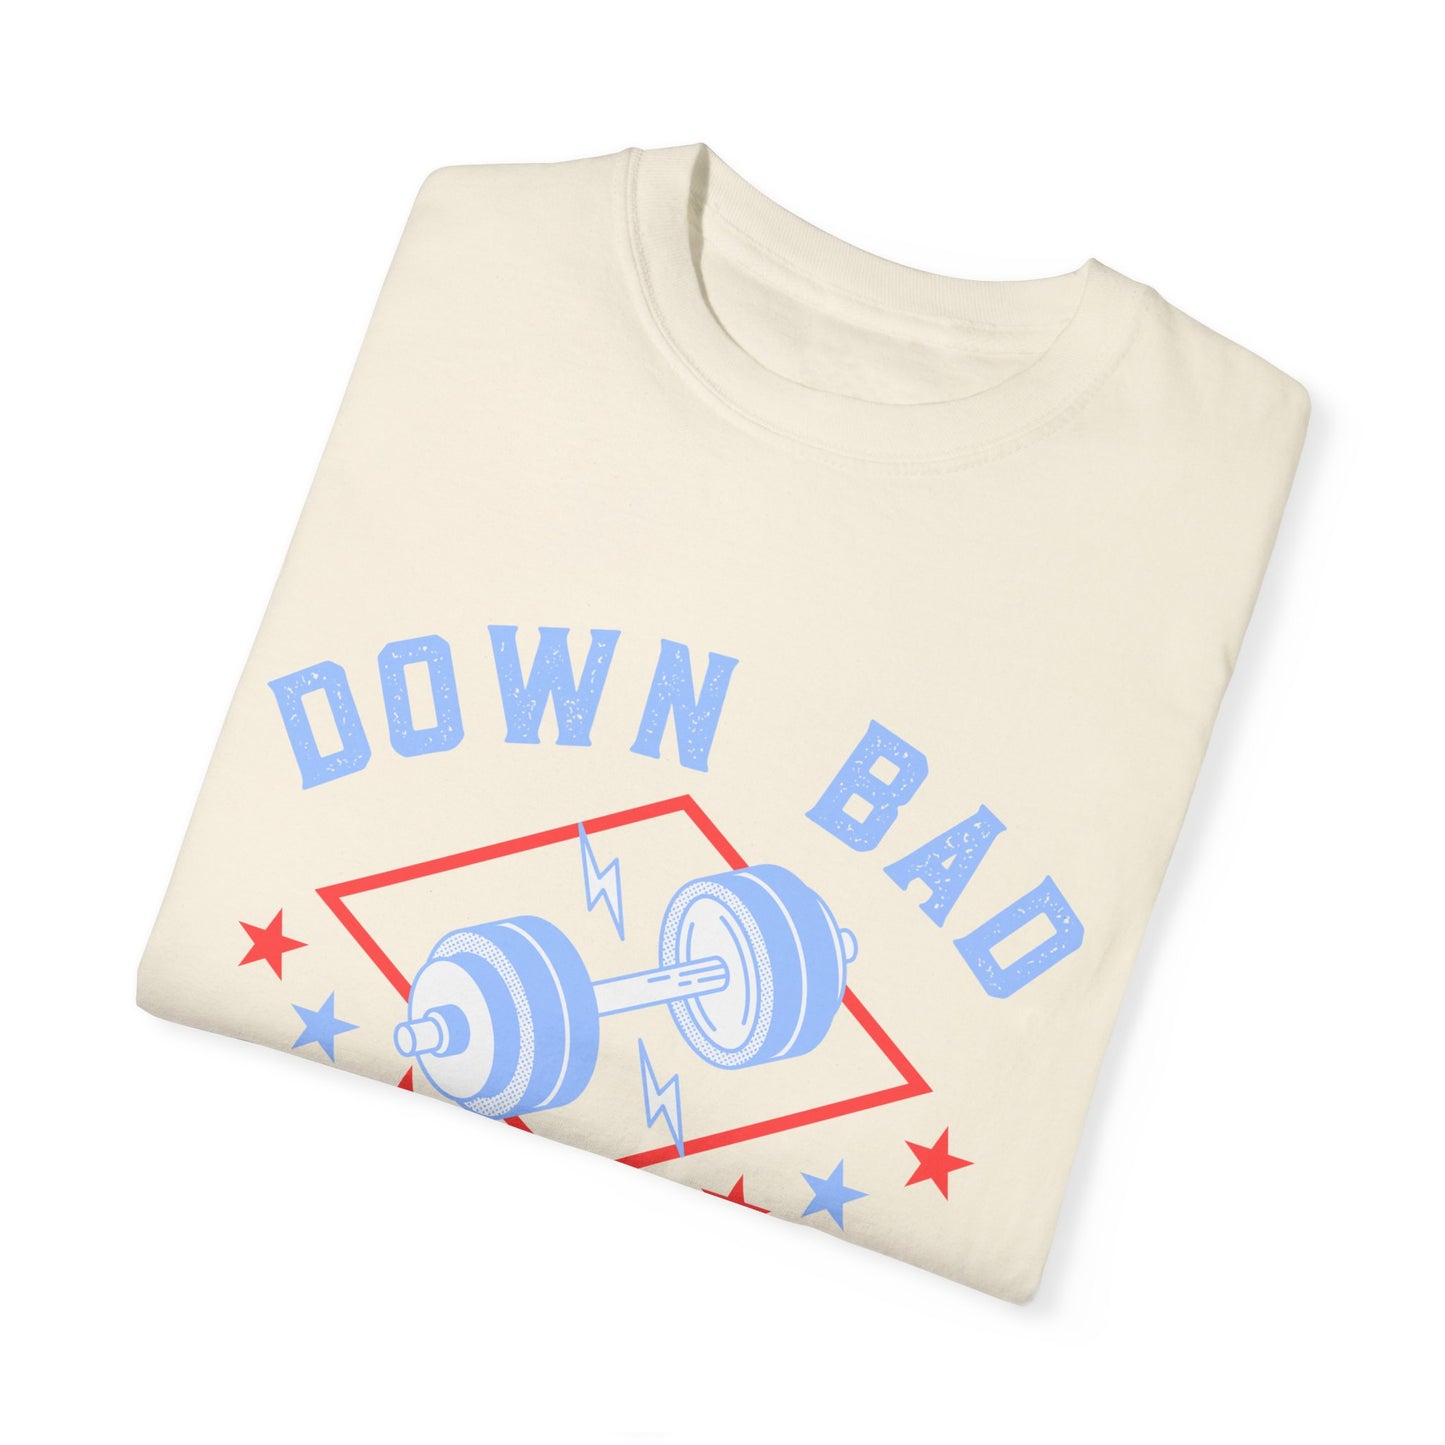 Down Bad Garment-Dyed T-shirt